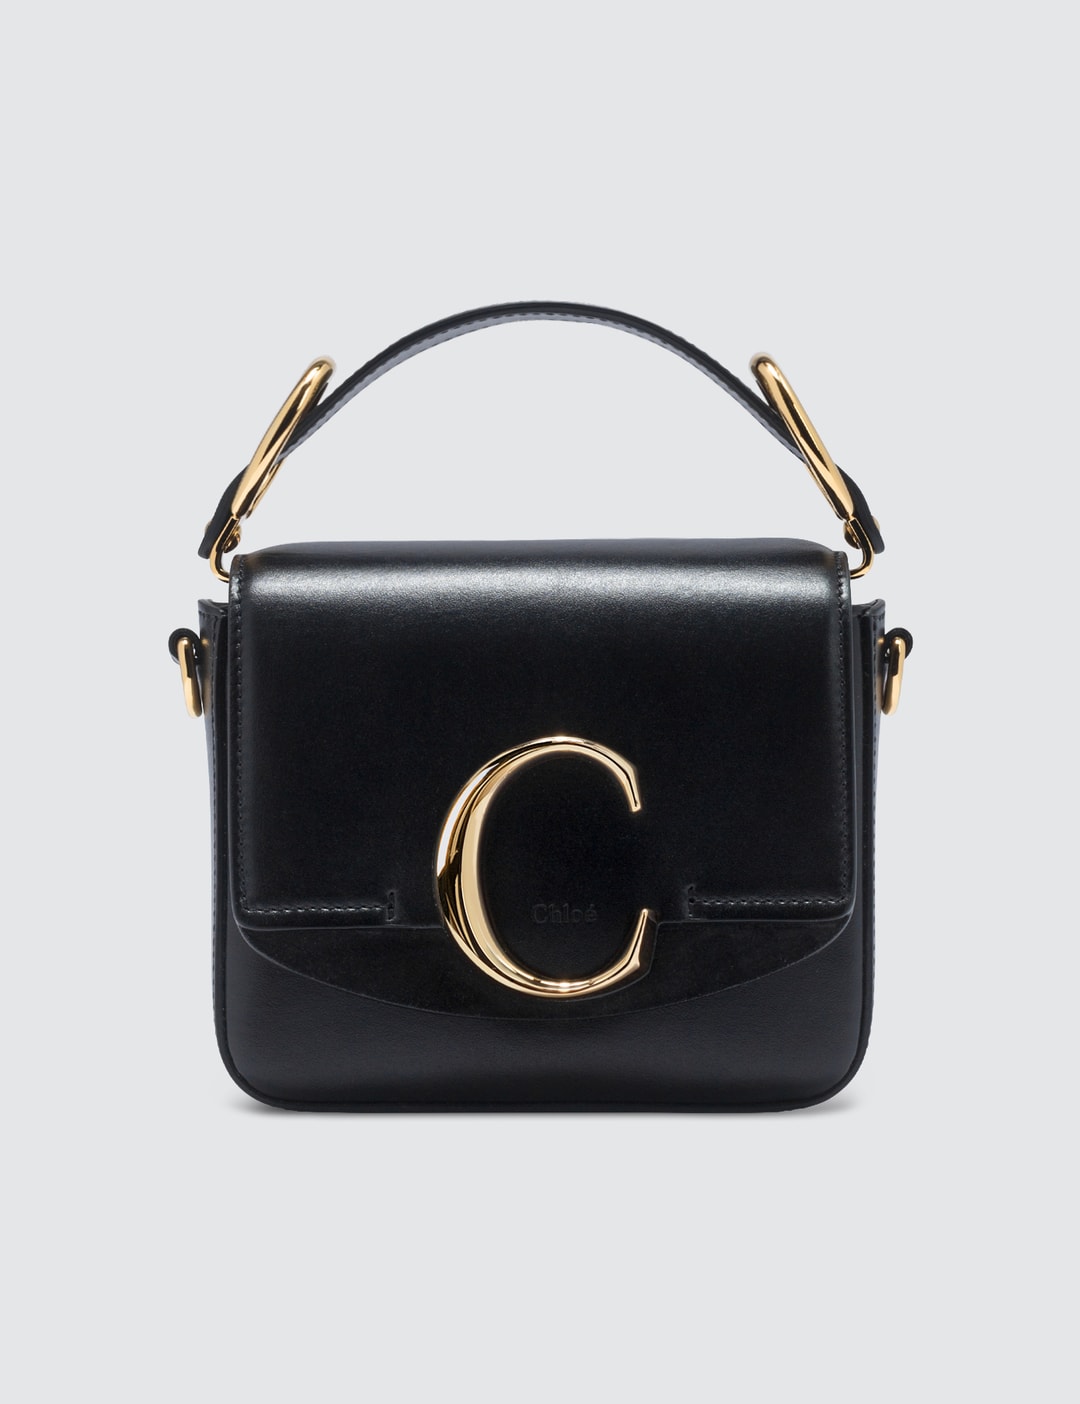 Chloé - Mini Chloé C Bag | HBX - Globally Curated Fashion and Lifestyle ...